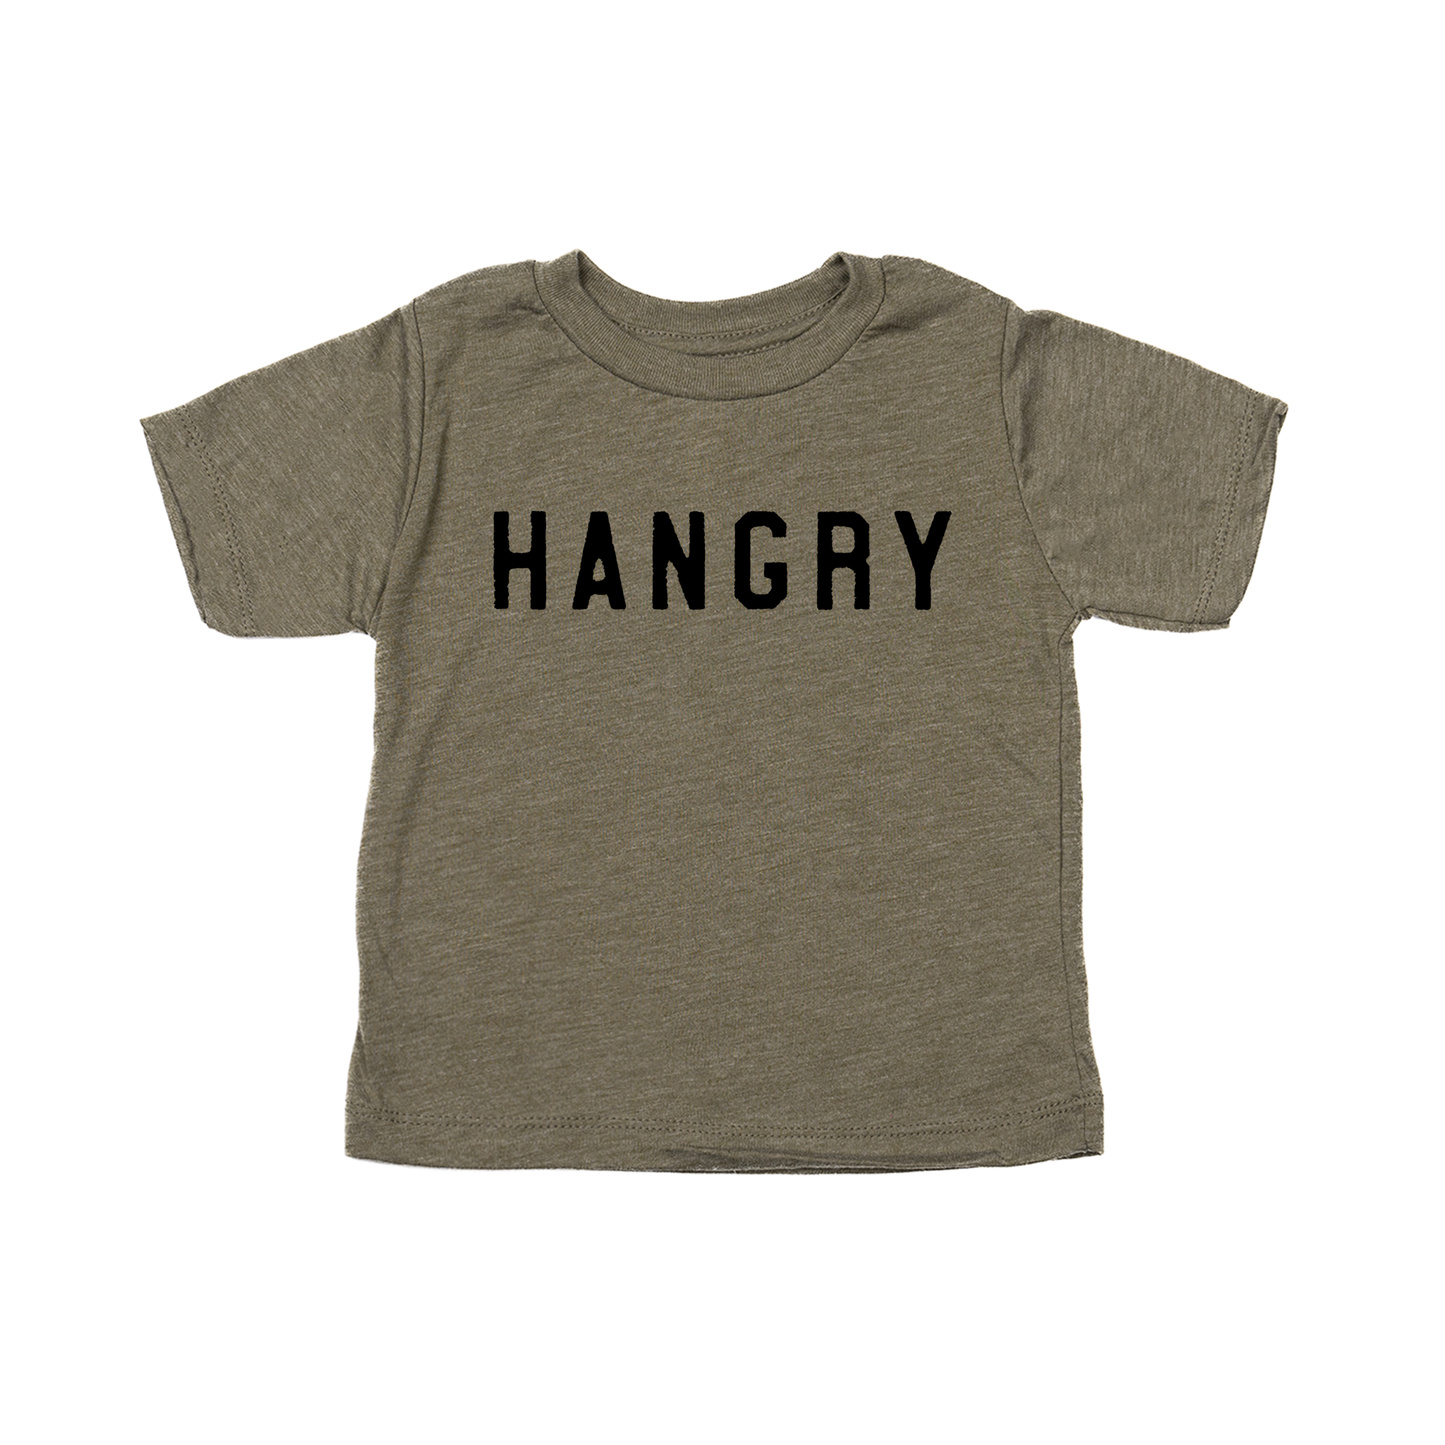 Hangry - Kids Tee (Olive)